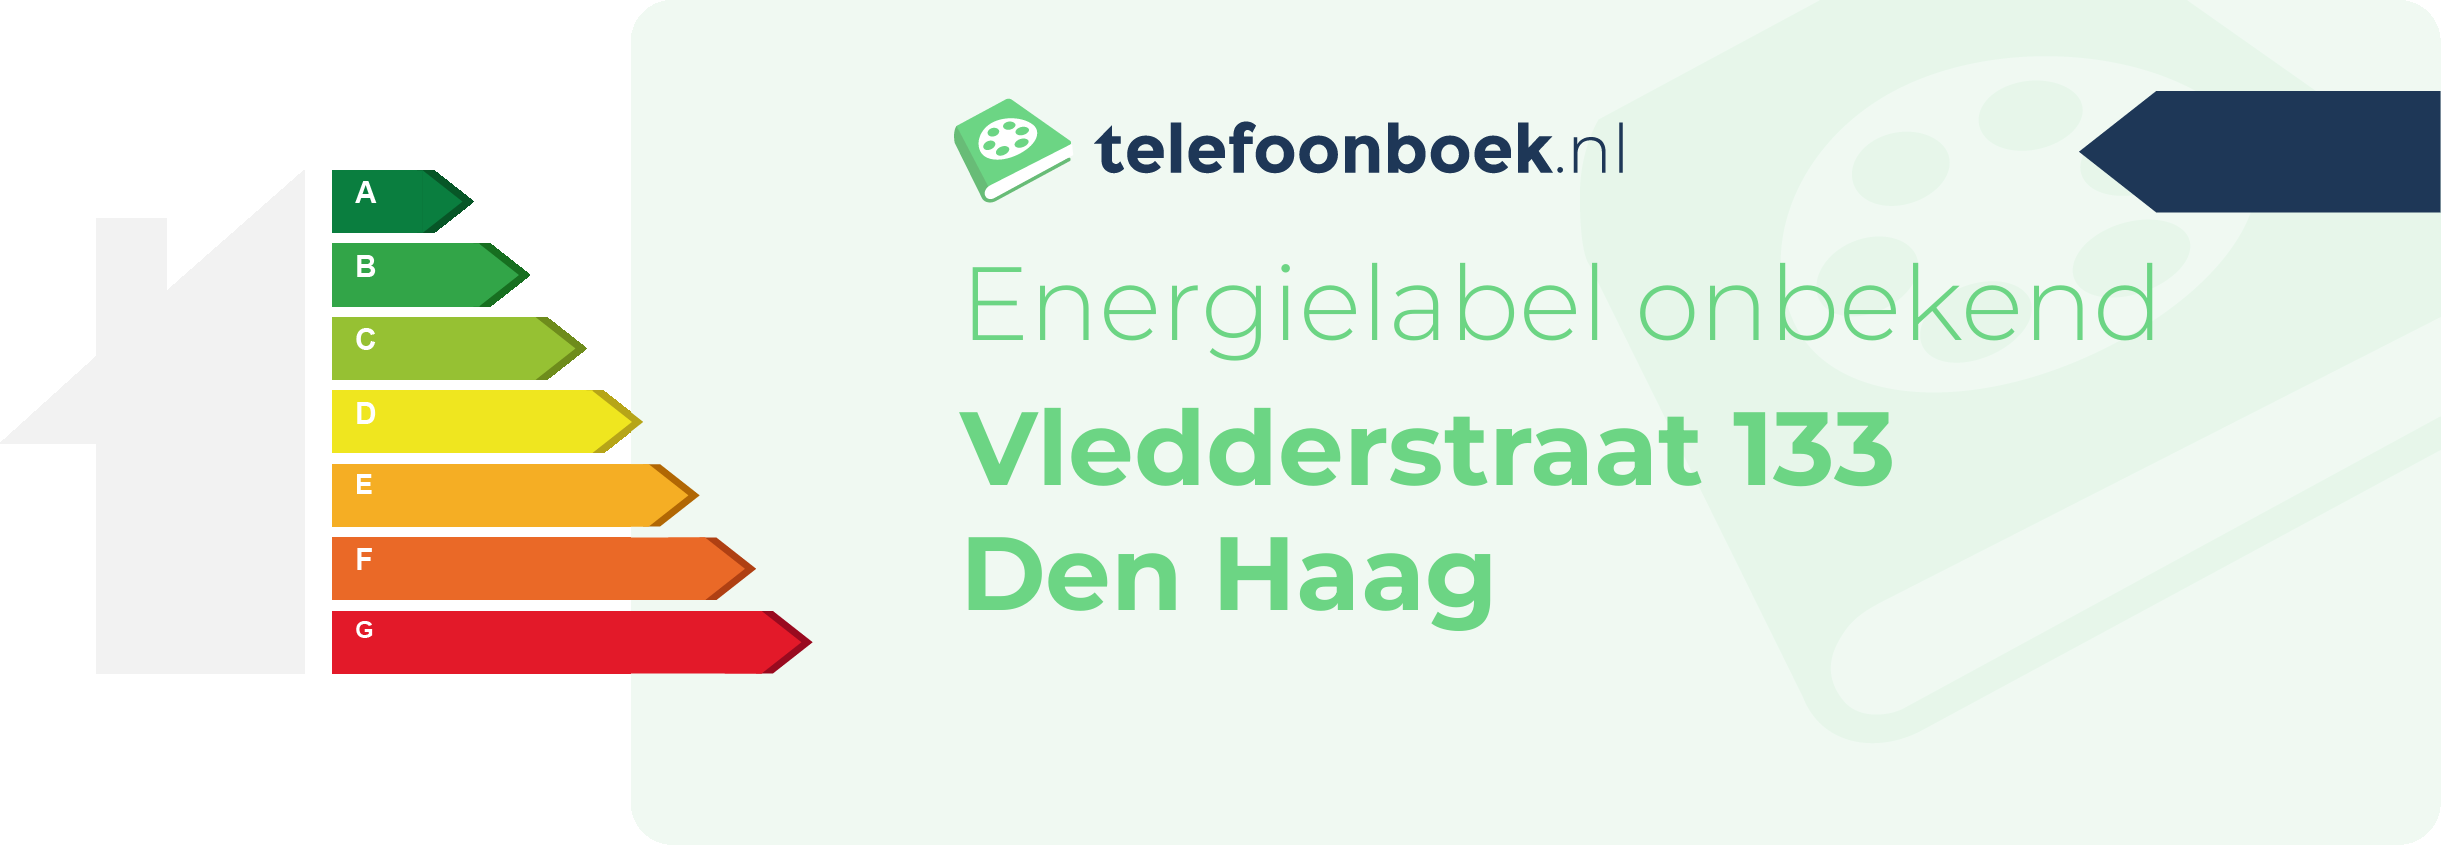 Energielabel Vledderstraat 133 Den Haag